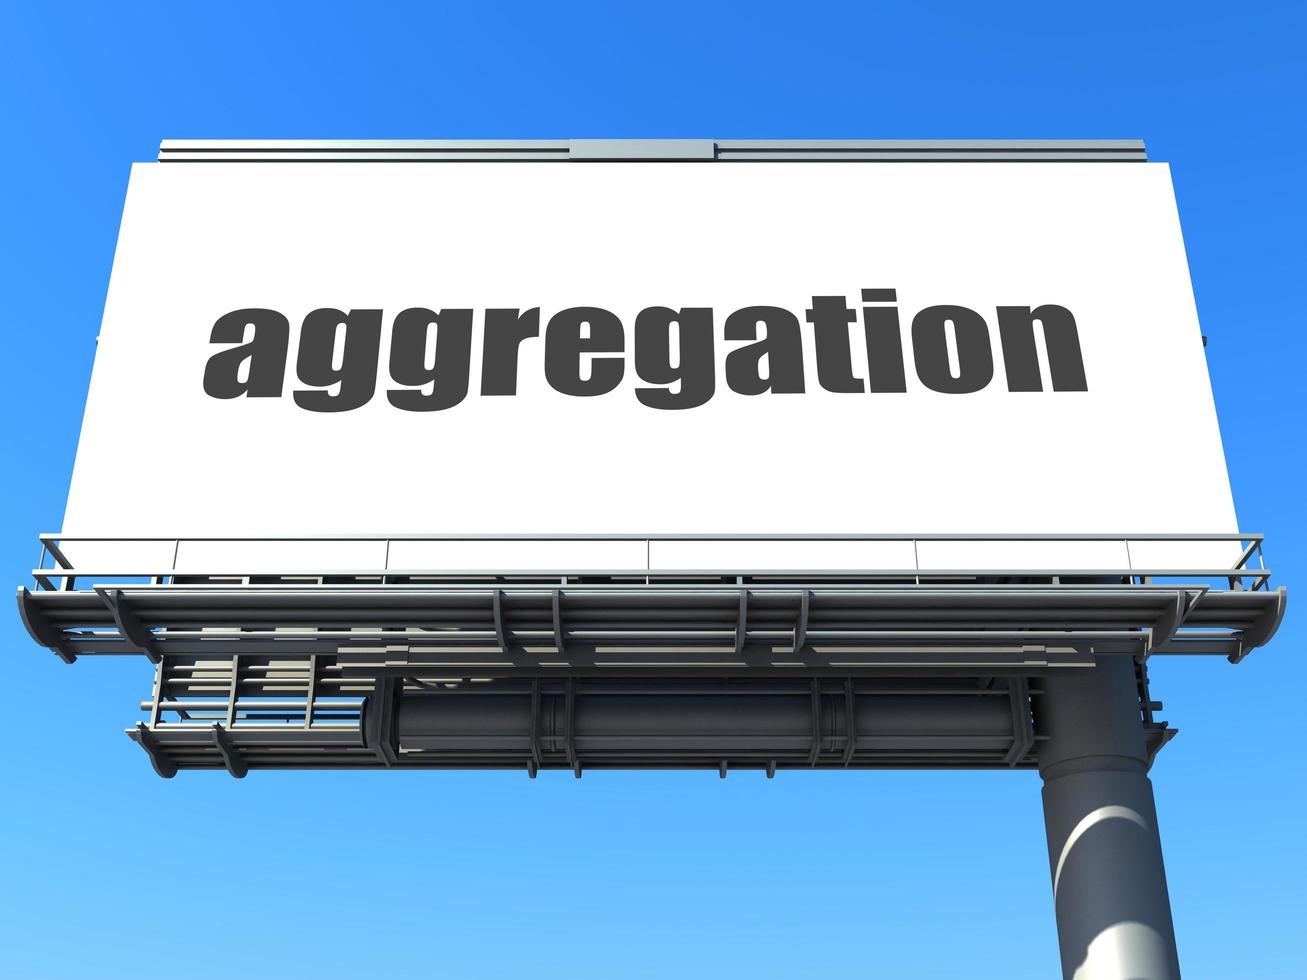 Aggregationswort auf Plakatwand foto